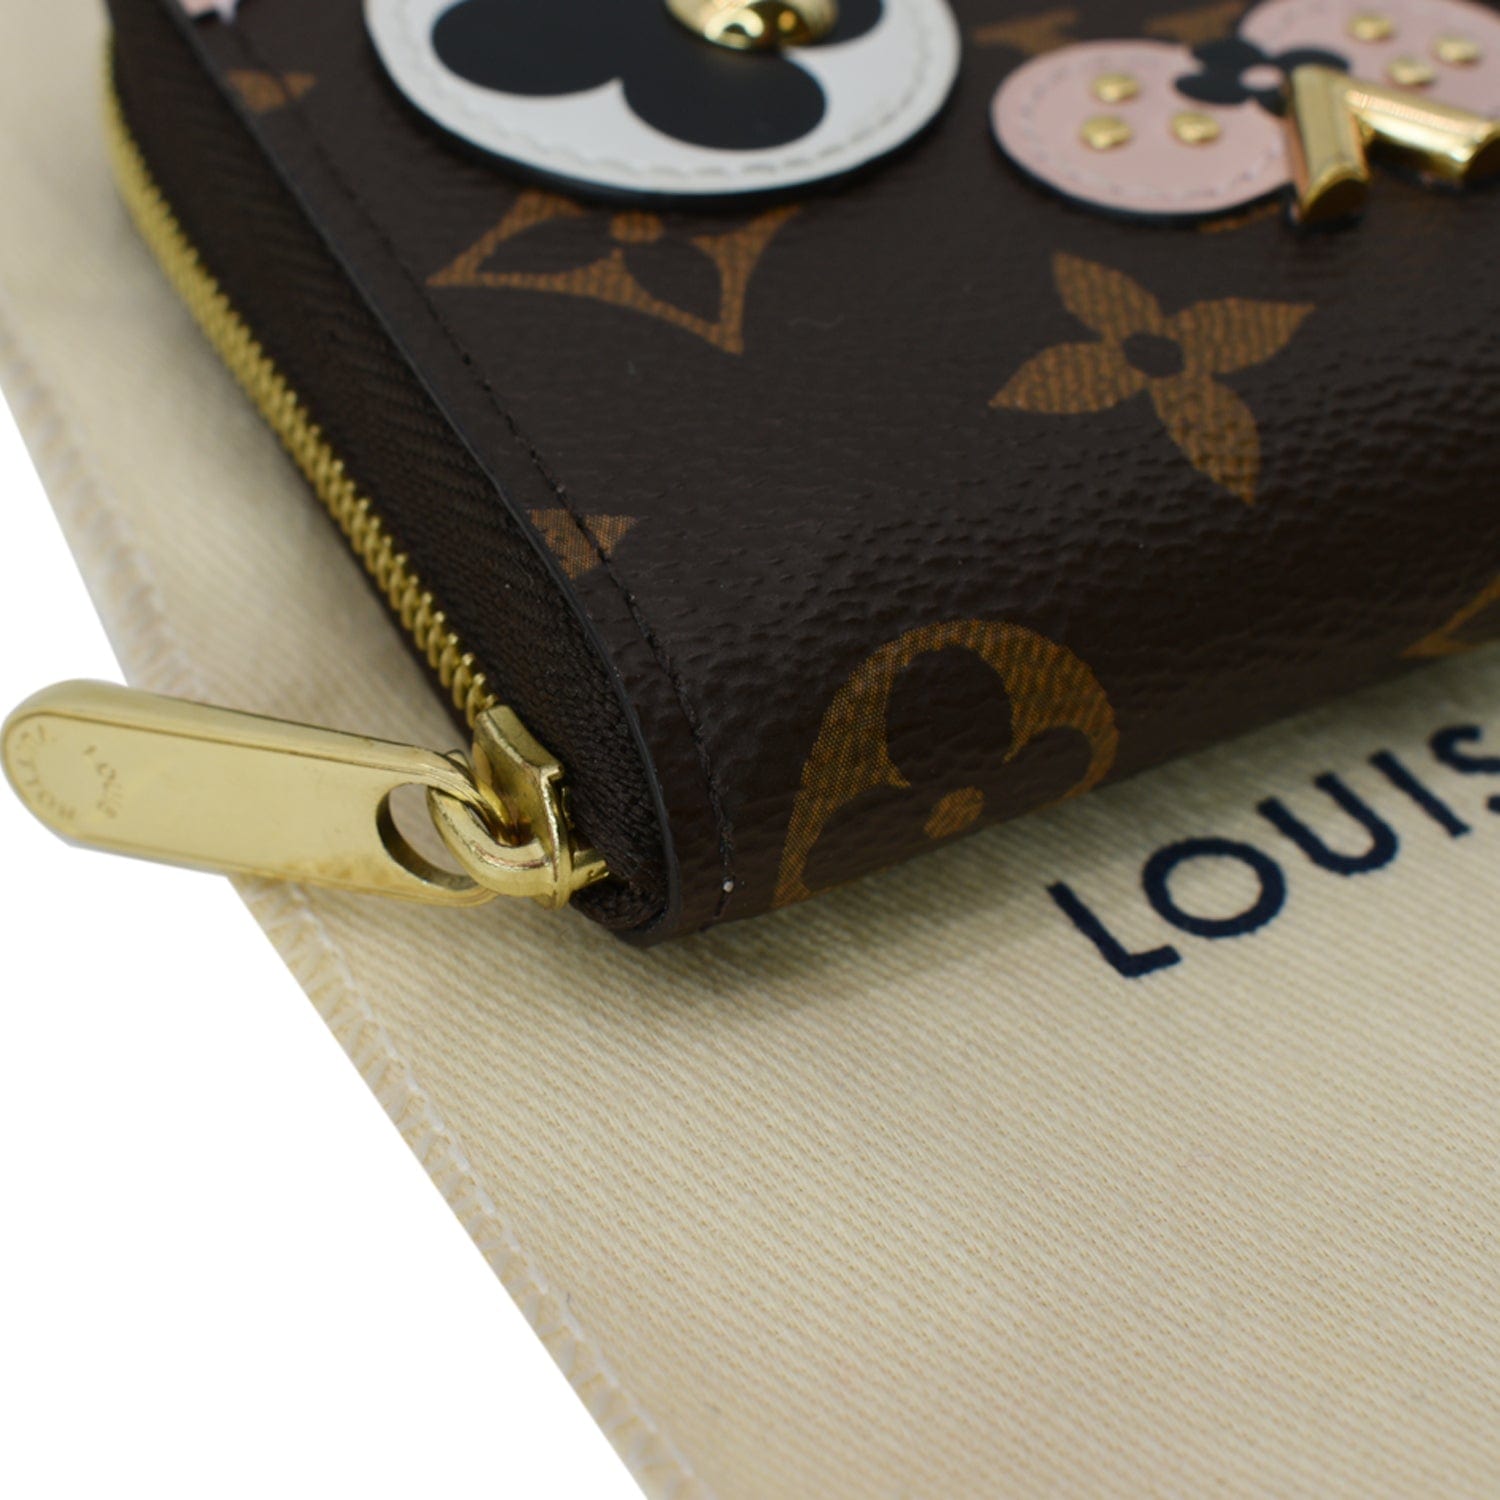 LOUIS VUITTON Dog Zippy Wallet Purse Monogram Canvas Brown M67246